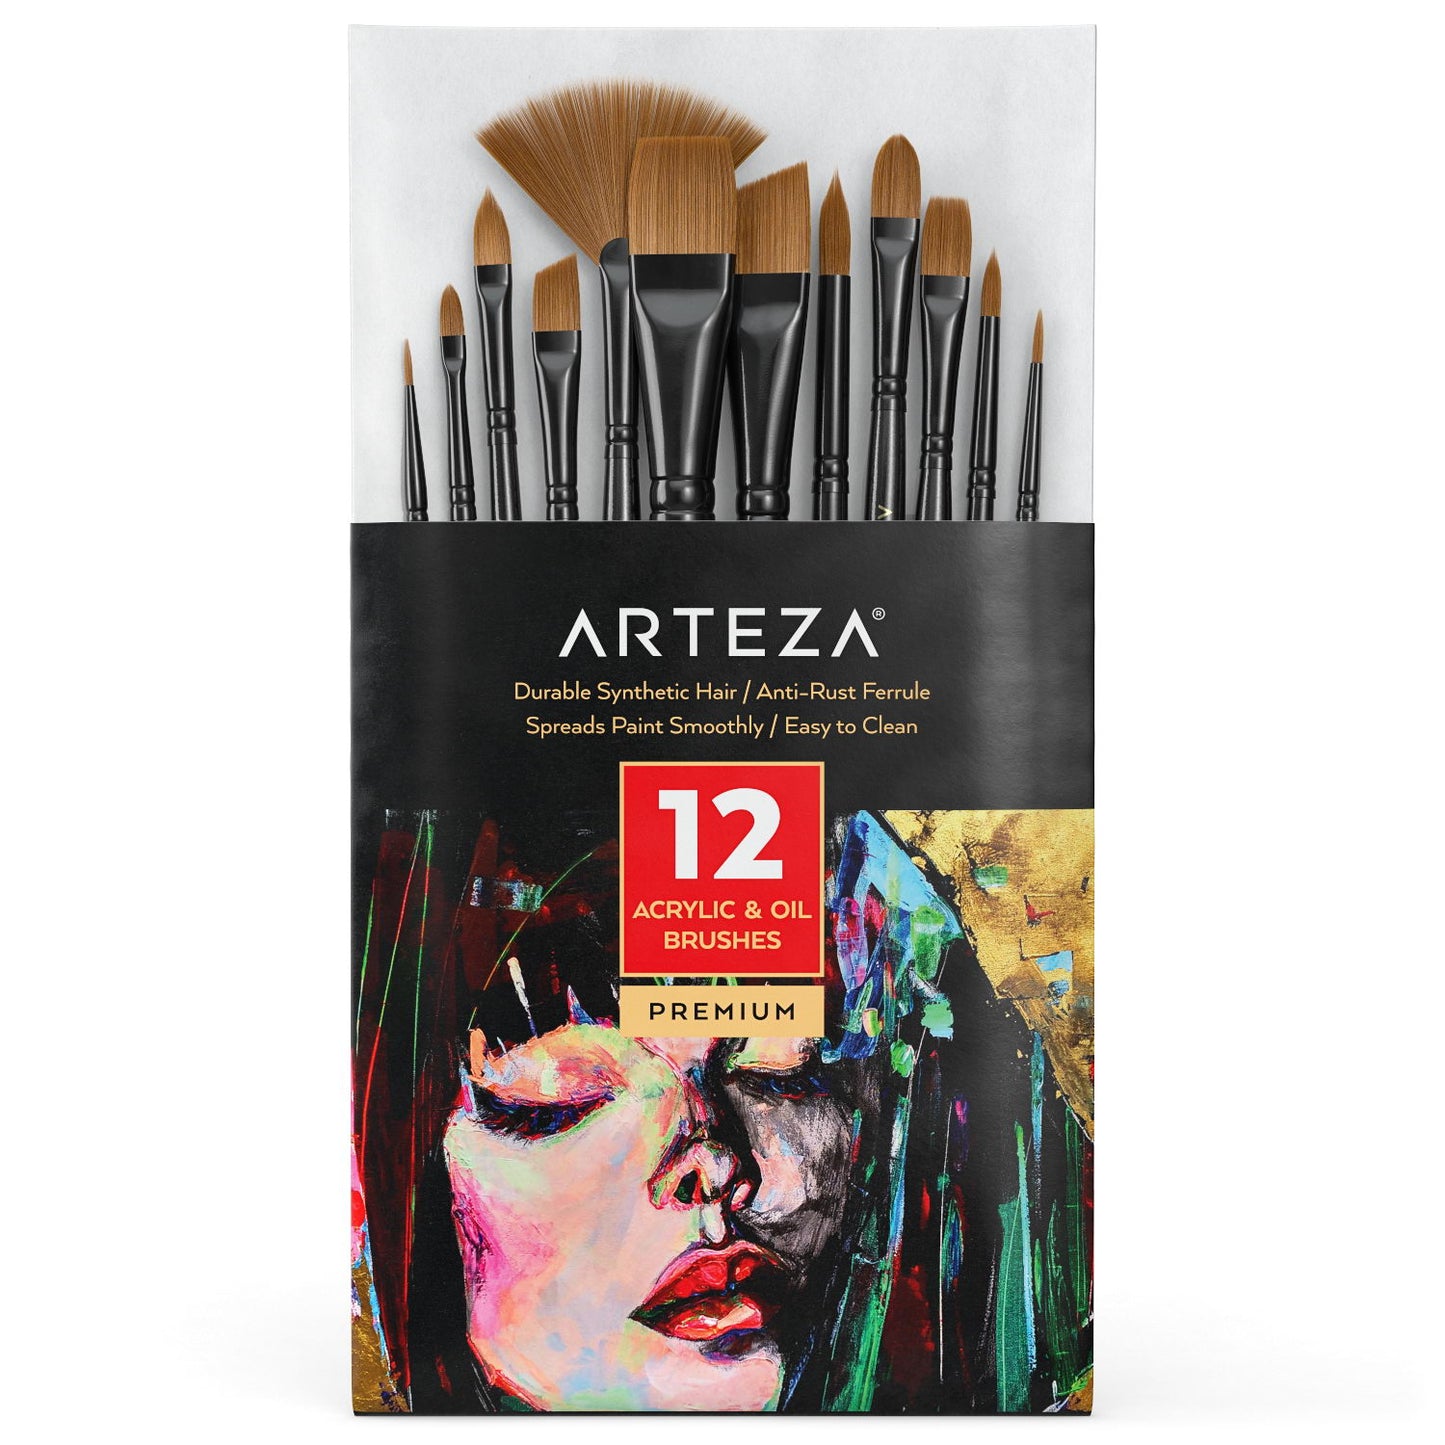 Art Supplies Watercolor Brushes Acrylic Paint Brush for Artist - China  Watercolor Paint Brush, Acrylic Paint Brush